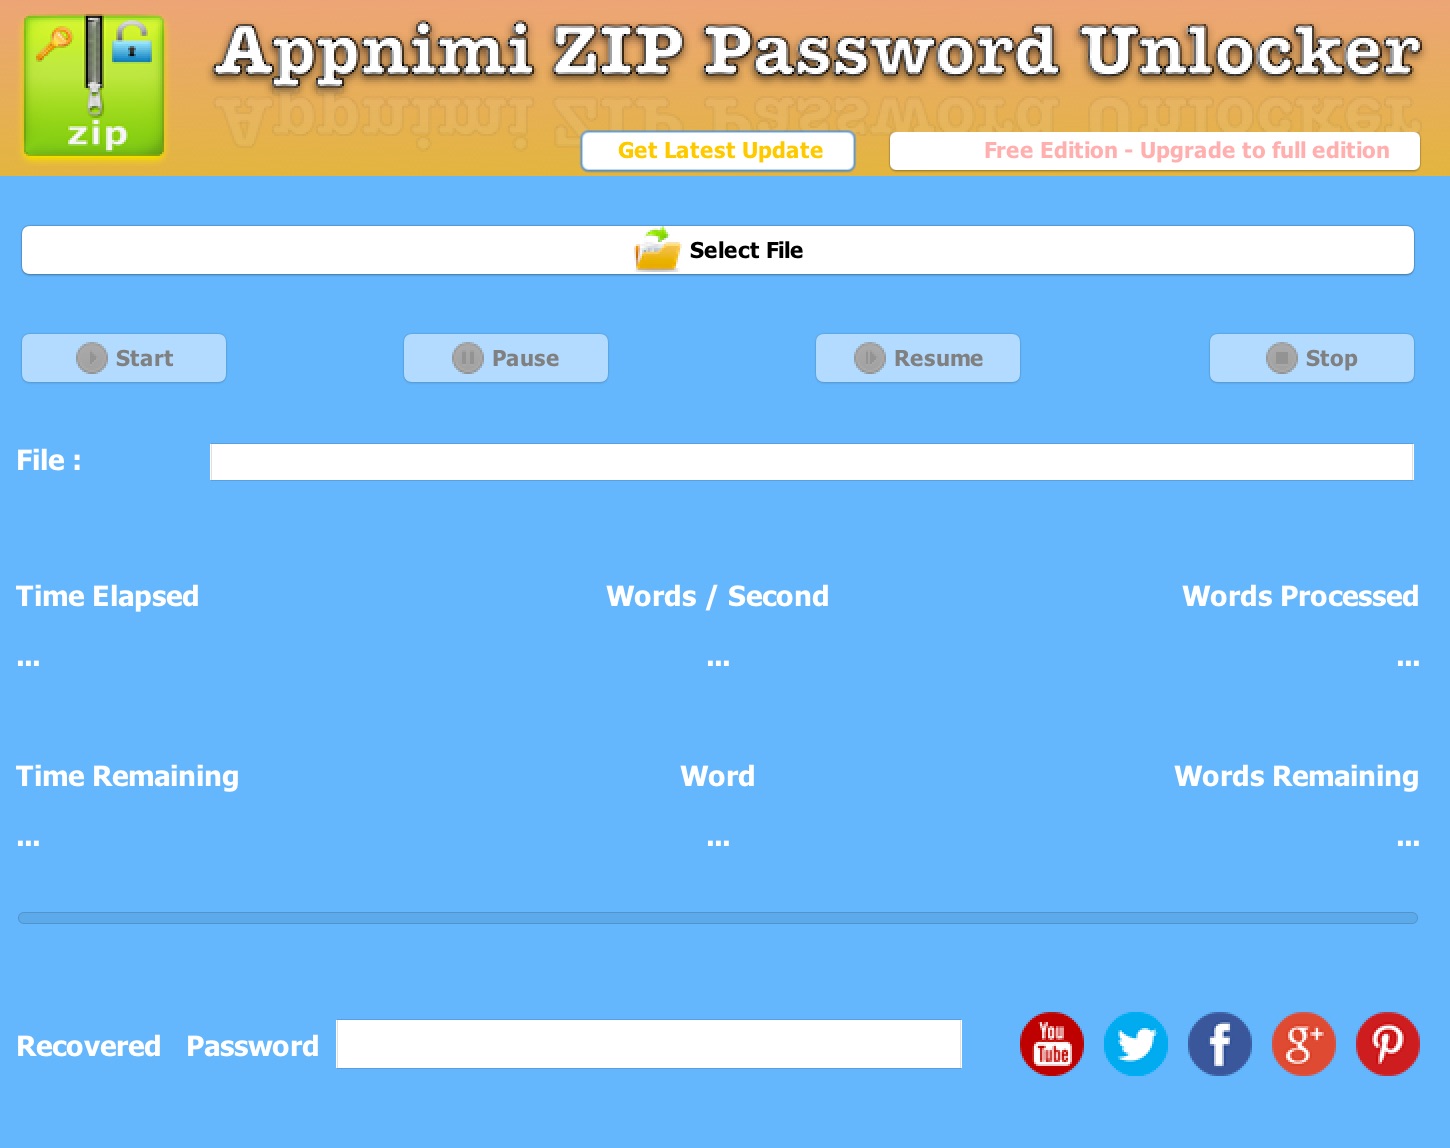 Appnimi ZIP Password Unlocker - Initial Screen